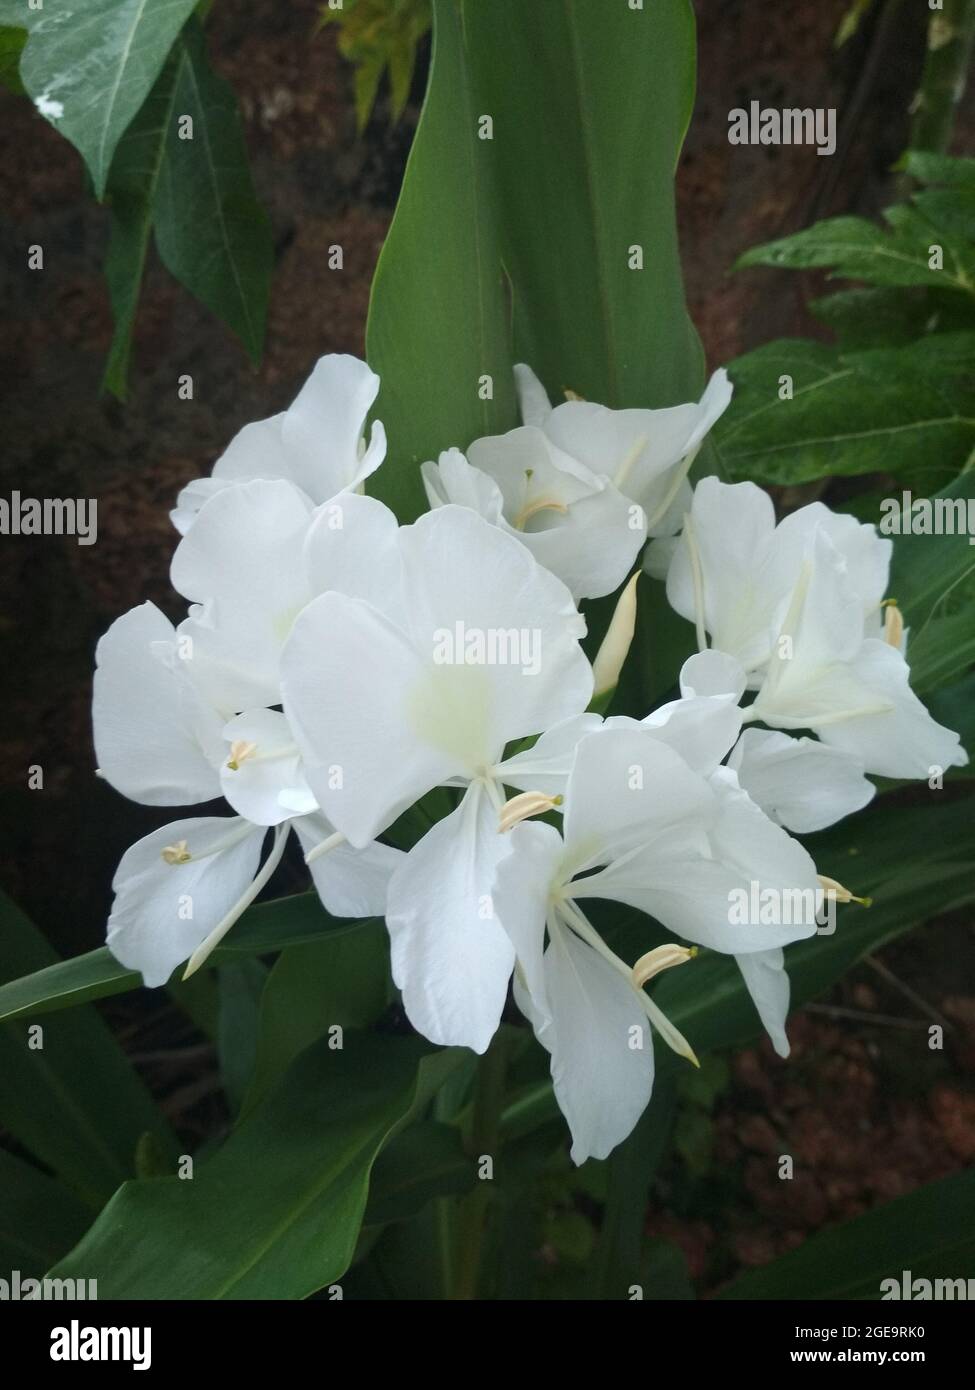 Selective focus shot of Hedychium coronarium white flowering plants growing in the garden Stock Photo